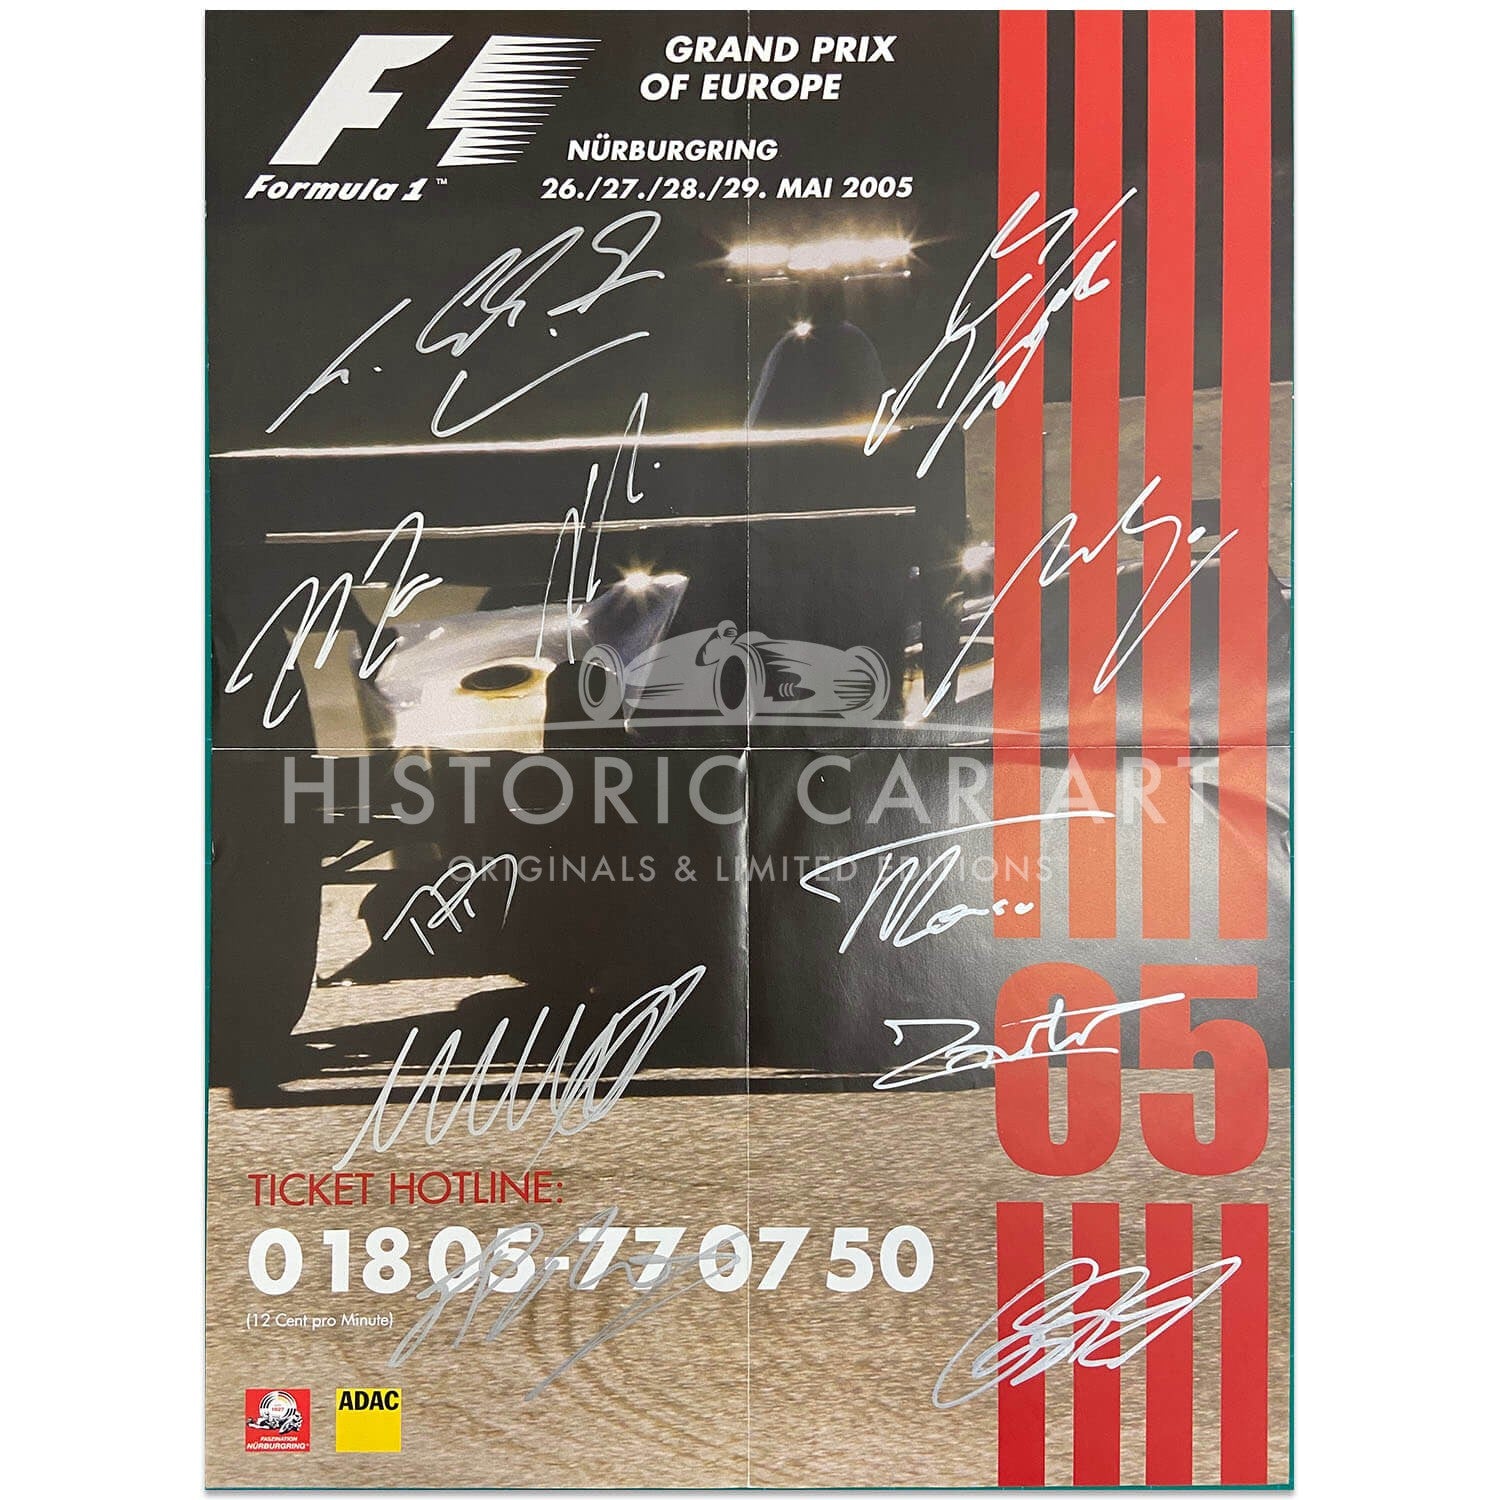 Grand Prix of Europe 2005 | Nurburgring | Driver Signed Original Poster